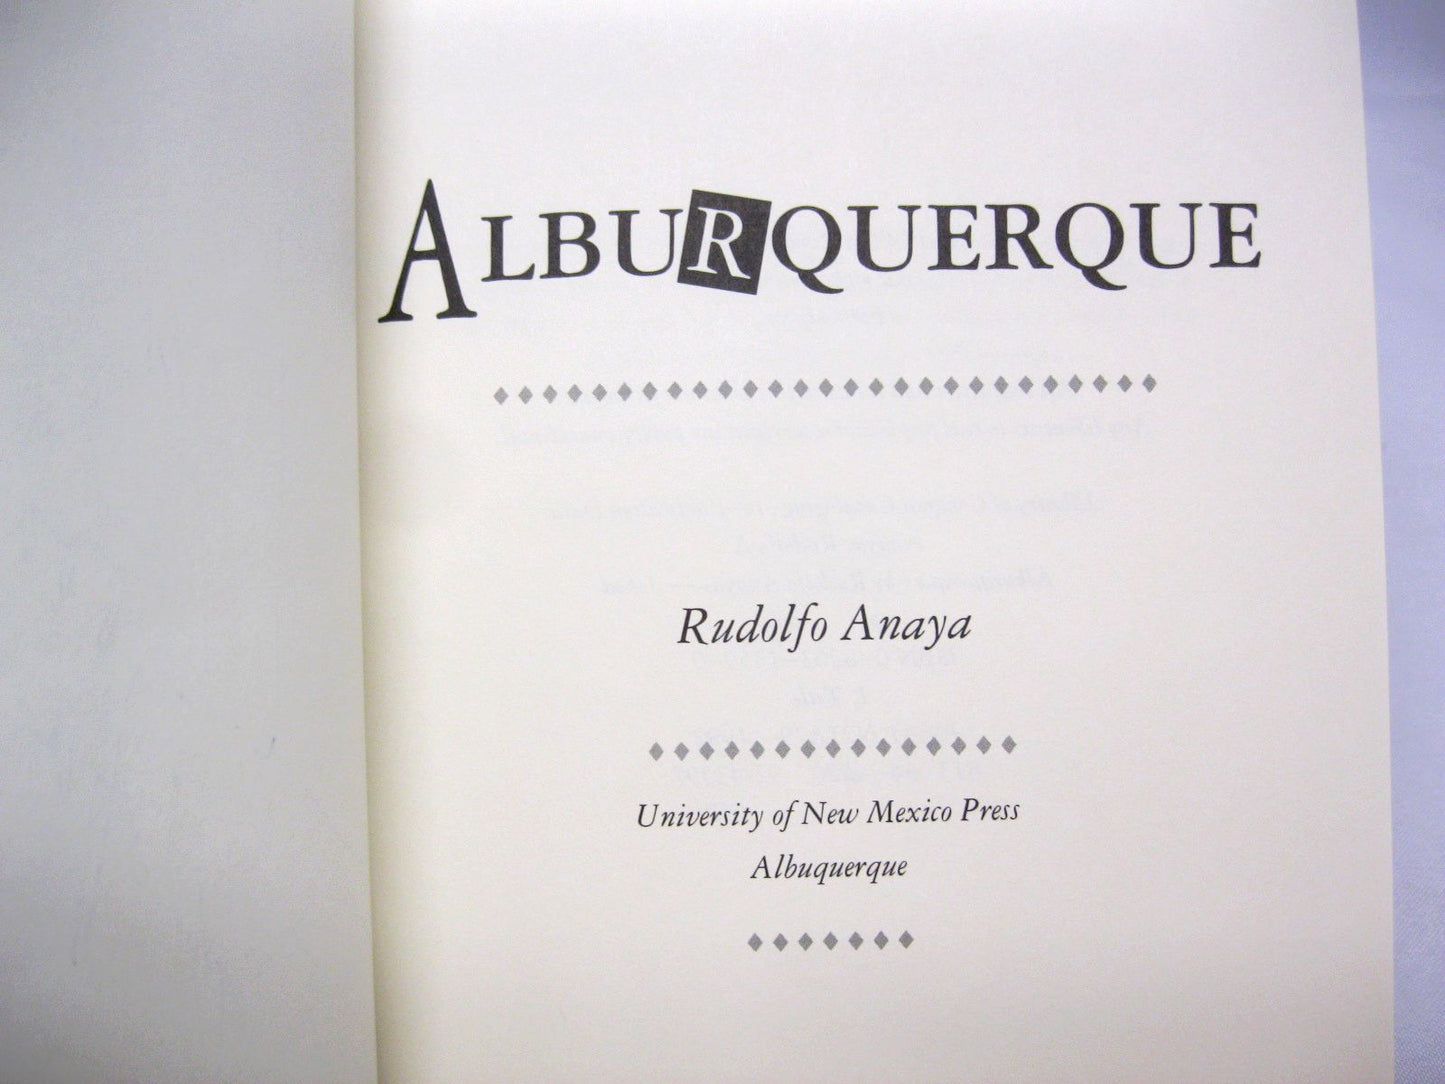 Alburquerque by Rudolfo Anaya